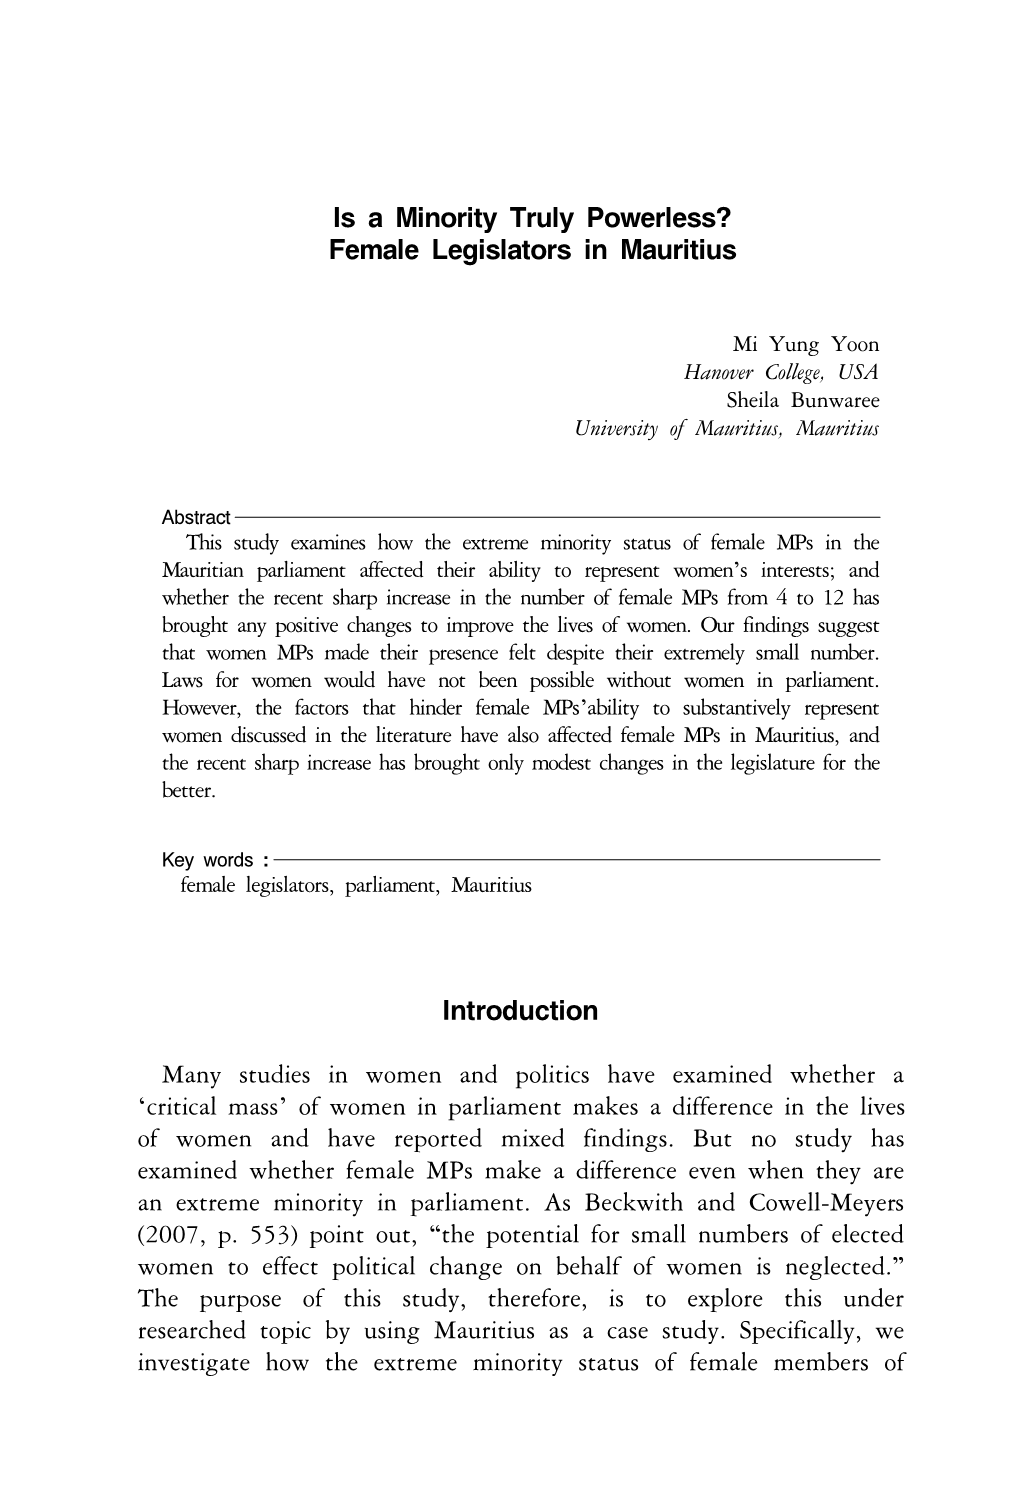 Is a Minority Truly Powerless? Female Legislators in Mauritius Introduction